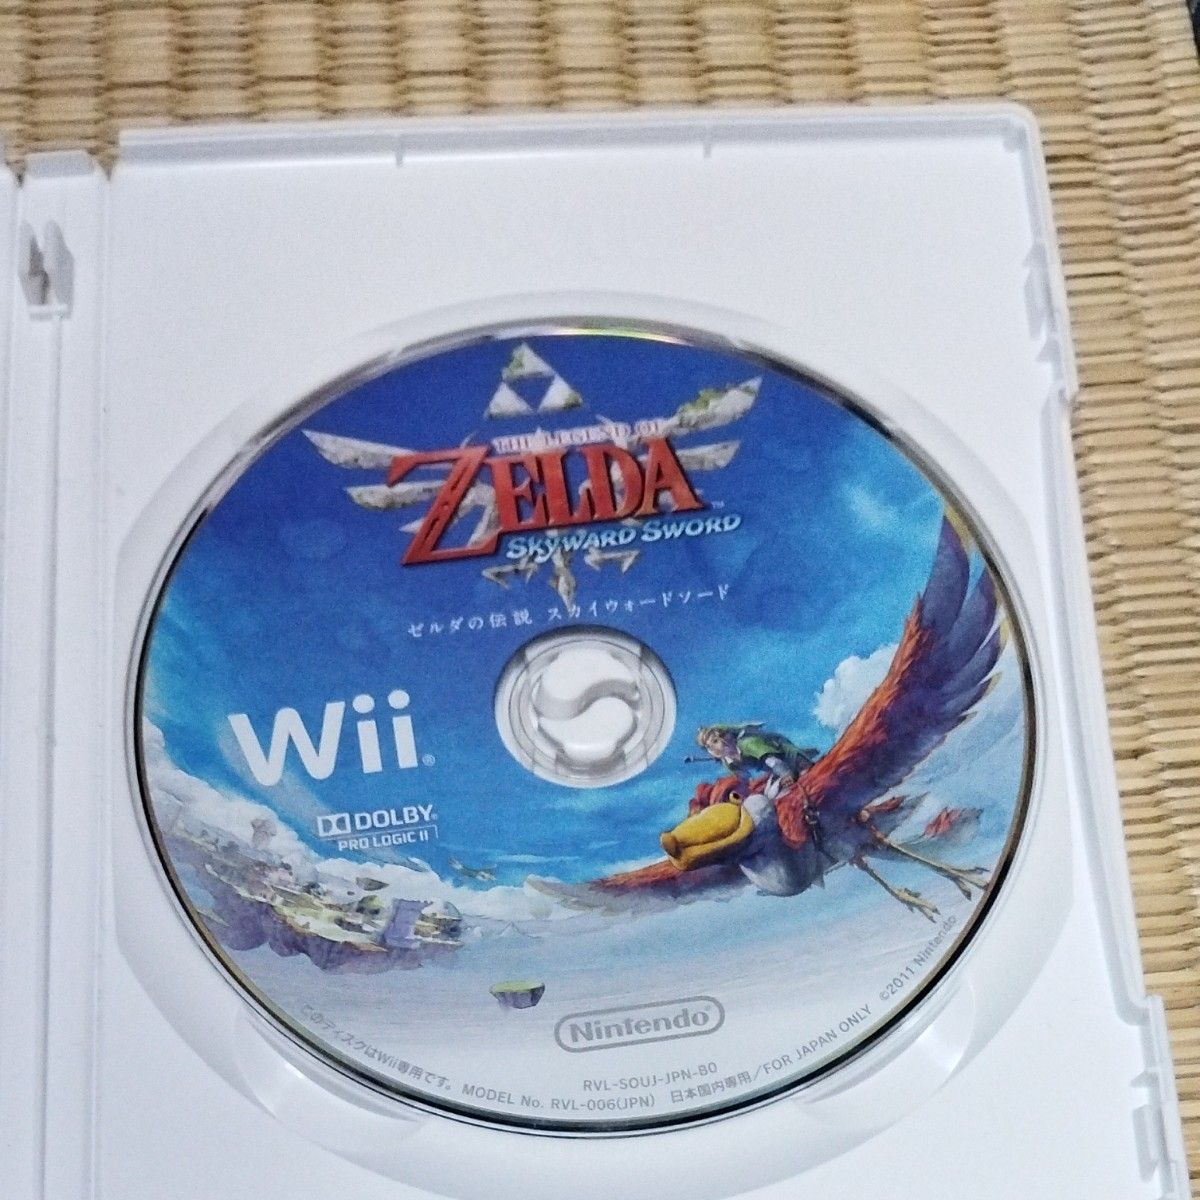 【Wii】 ゼルダの伝説 スカイウォードソード